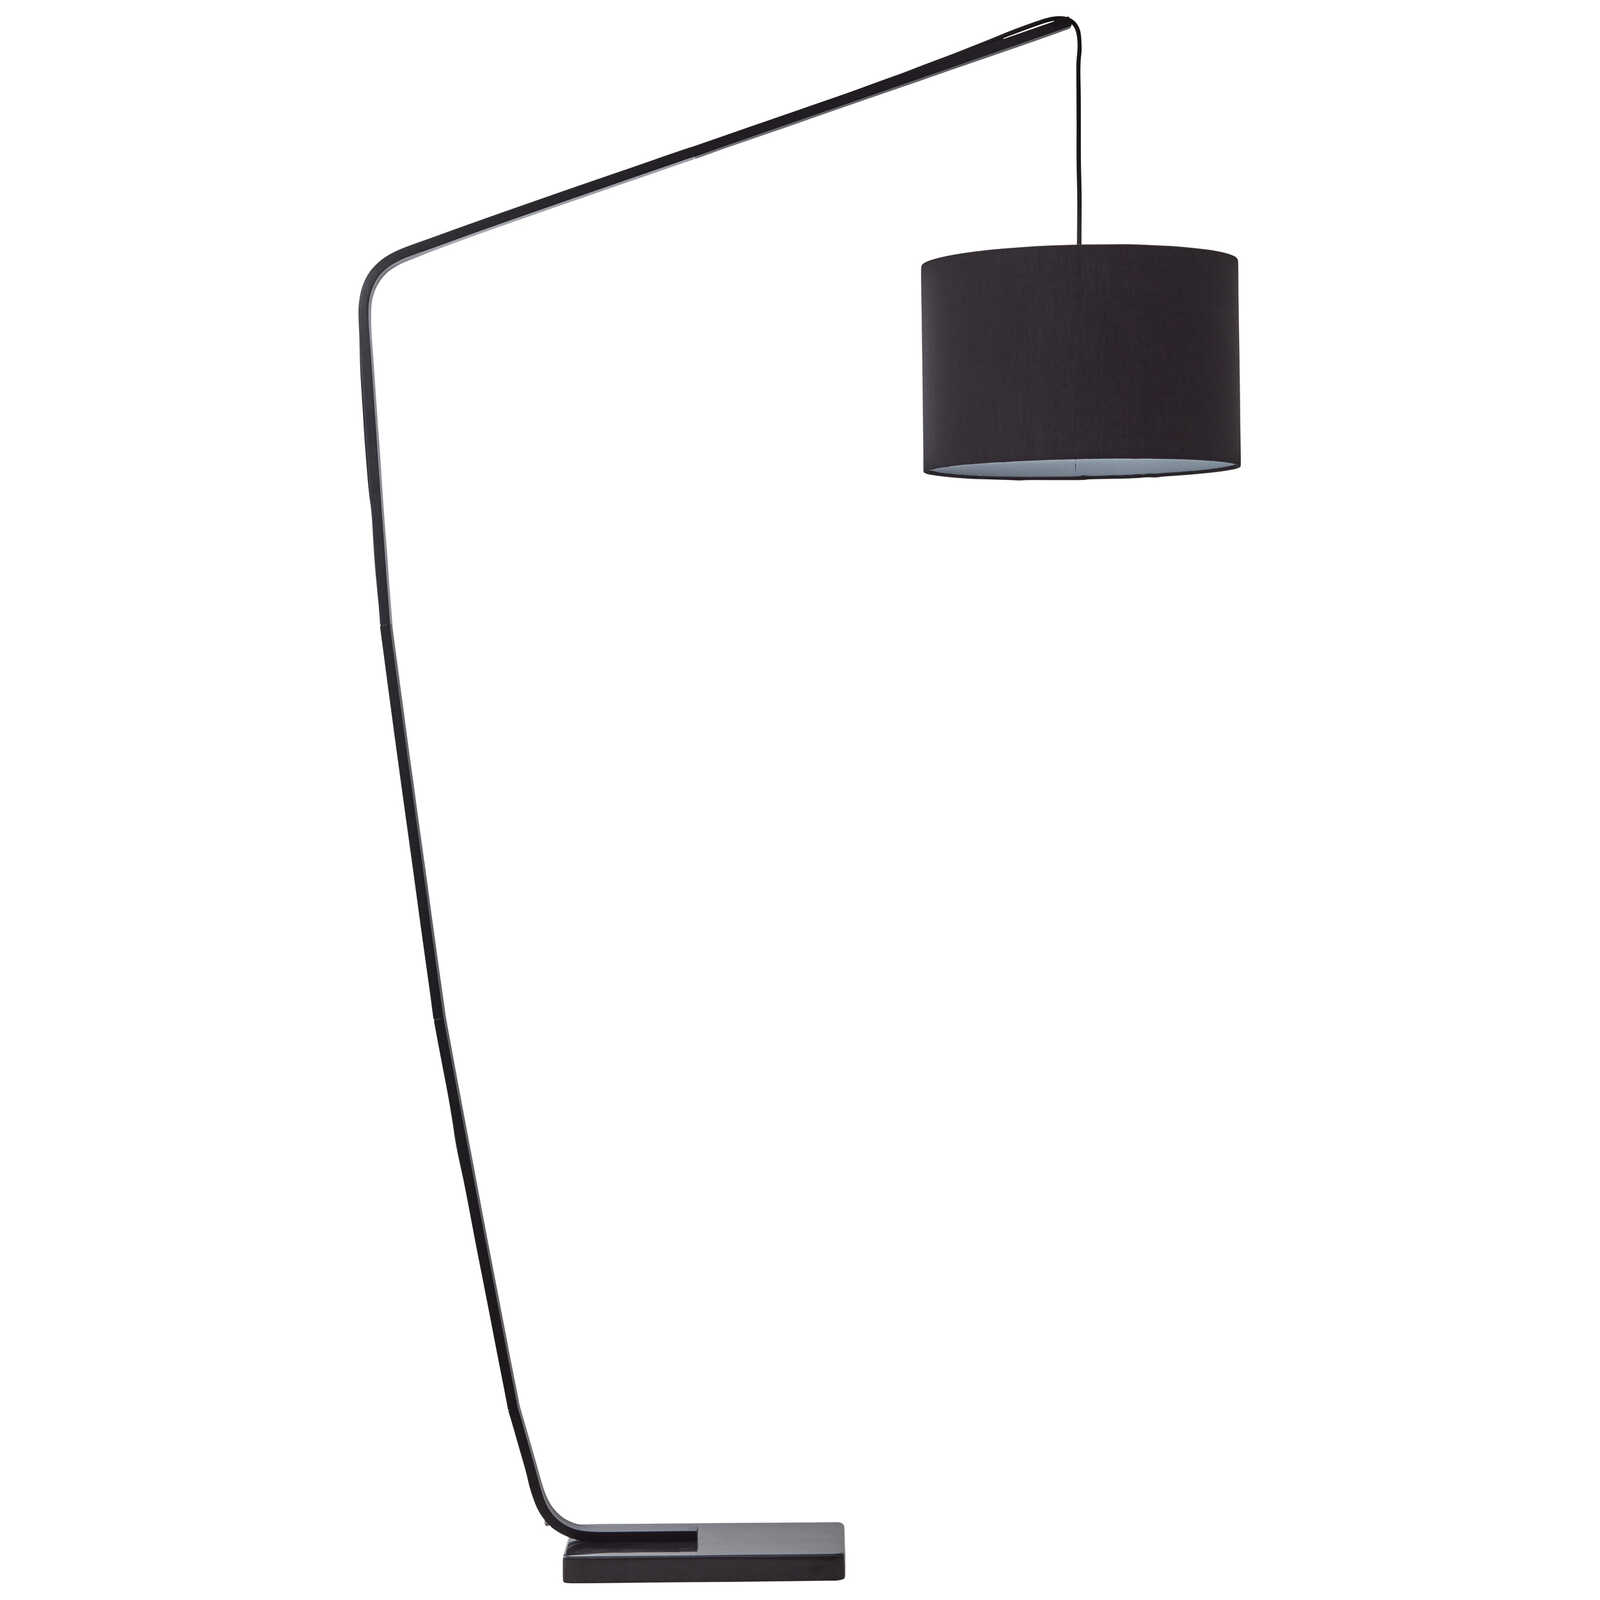             Textile arc floor lamp - Enno 2 - Black
        